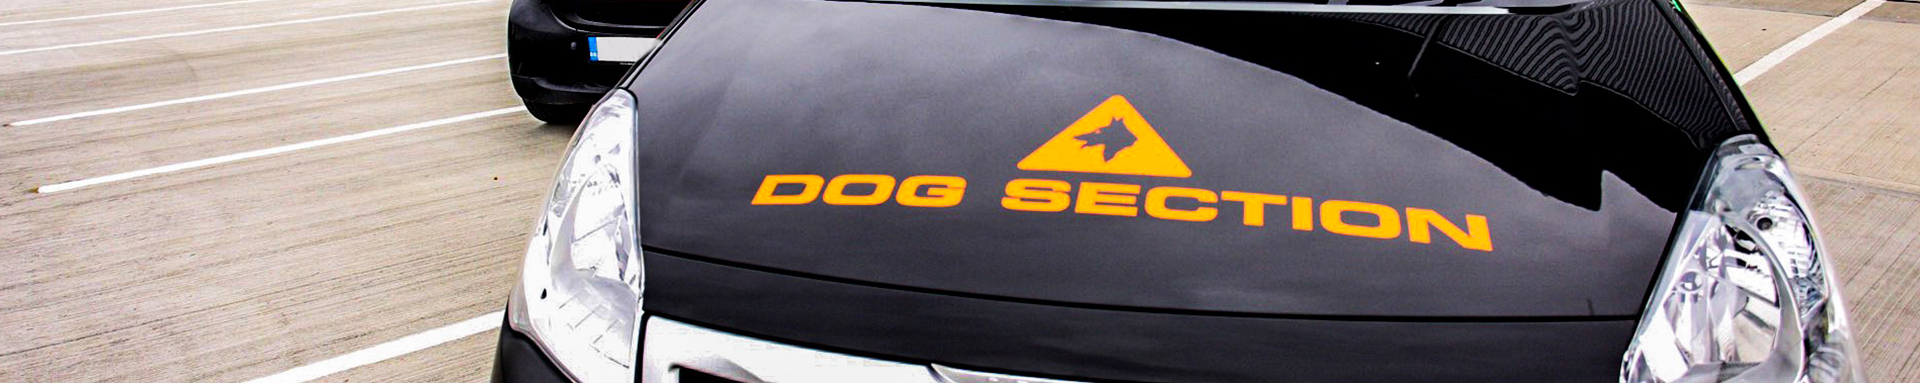 Sniffer Dogs Essex